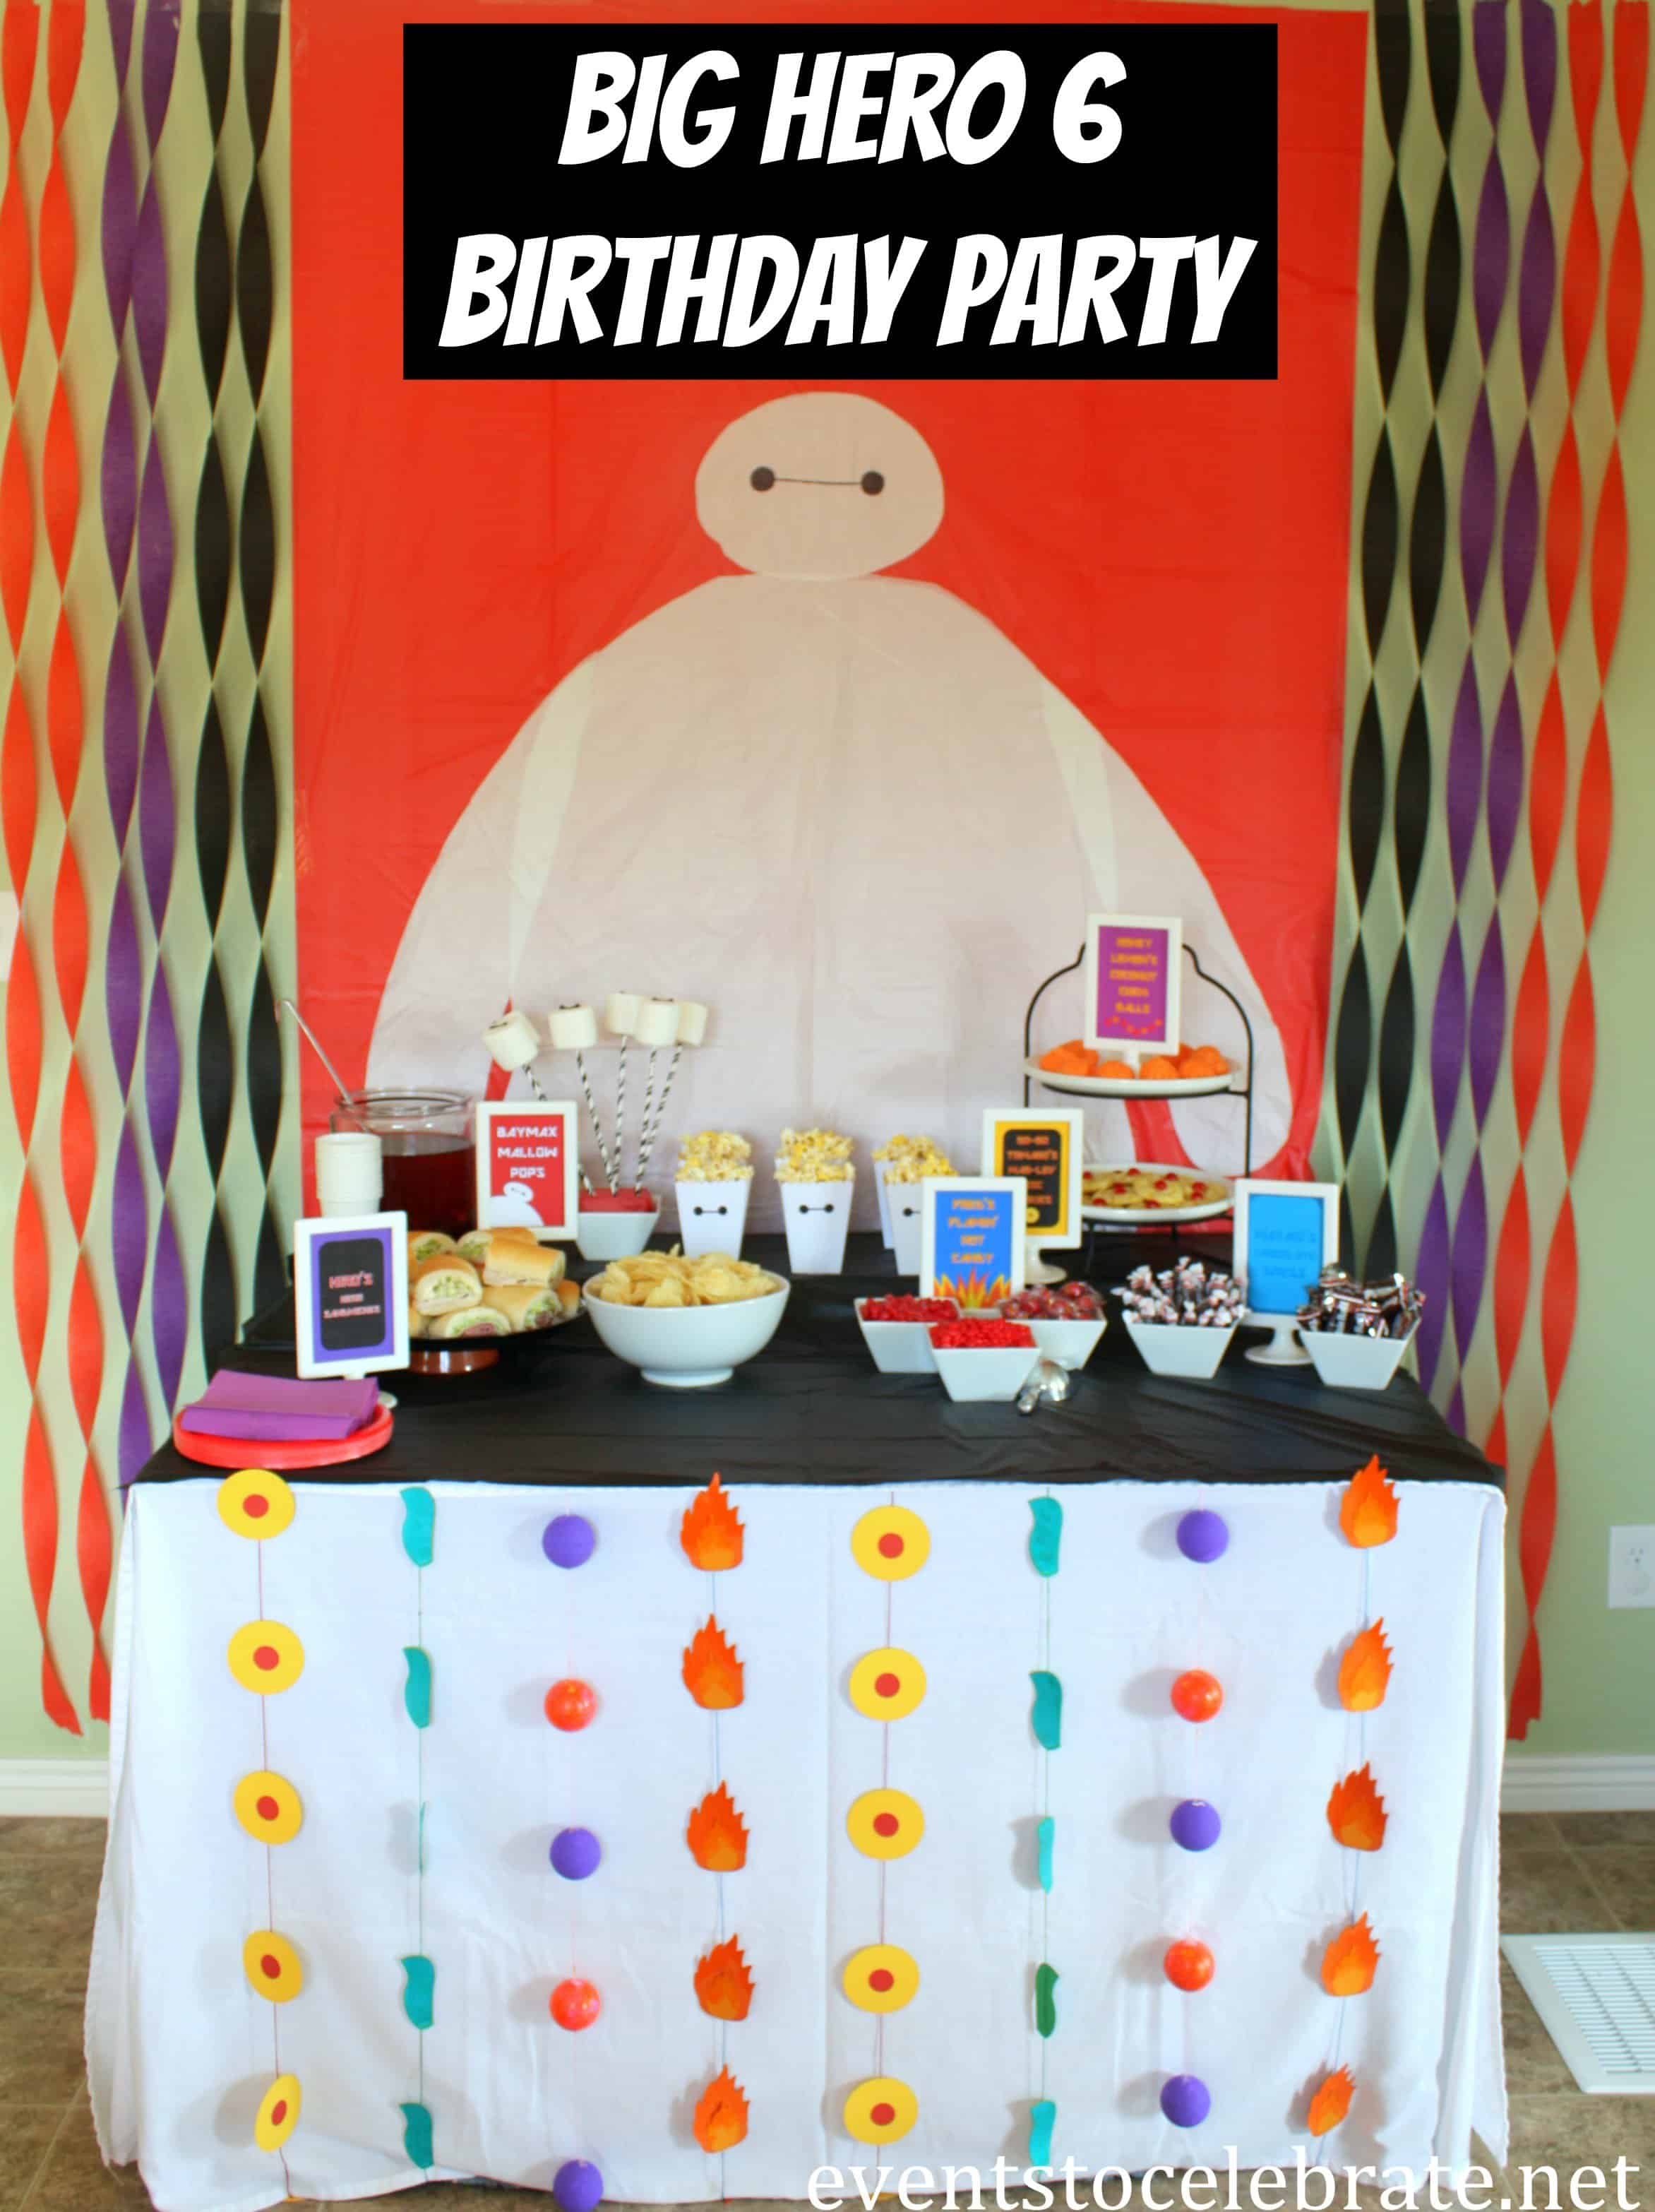 Big Hero 6 Birthday Party - eventstocelebrate.net #BigHero6Release #ad